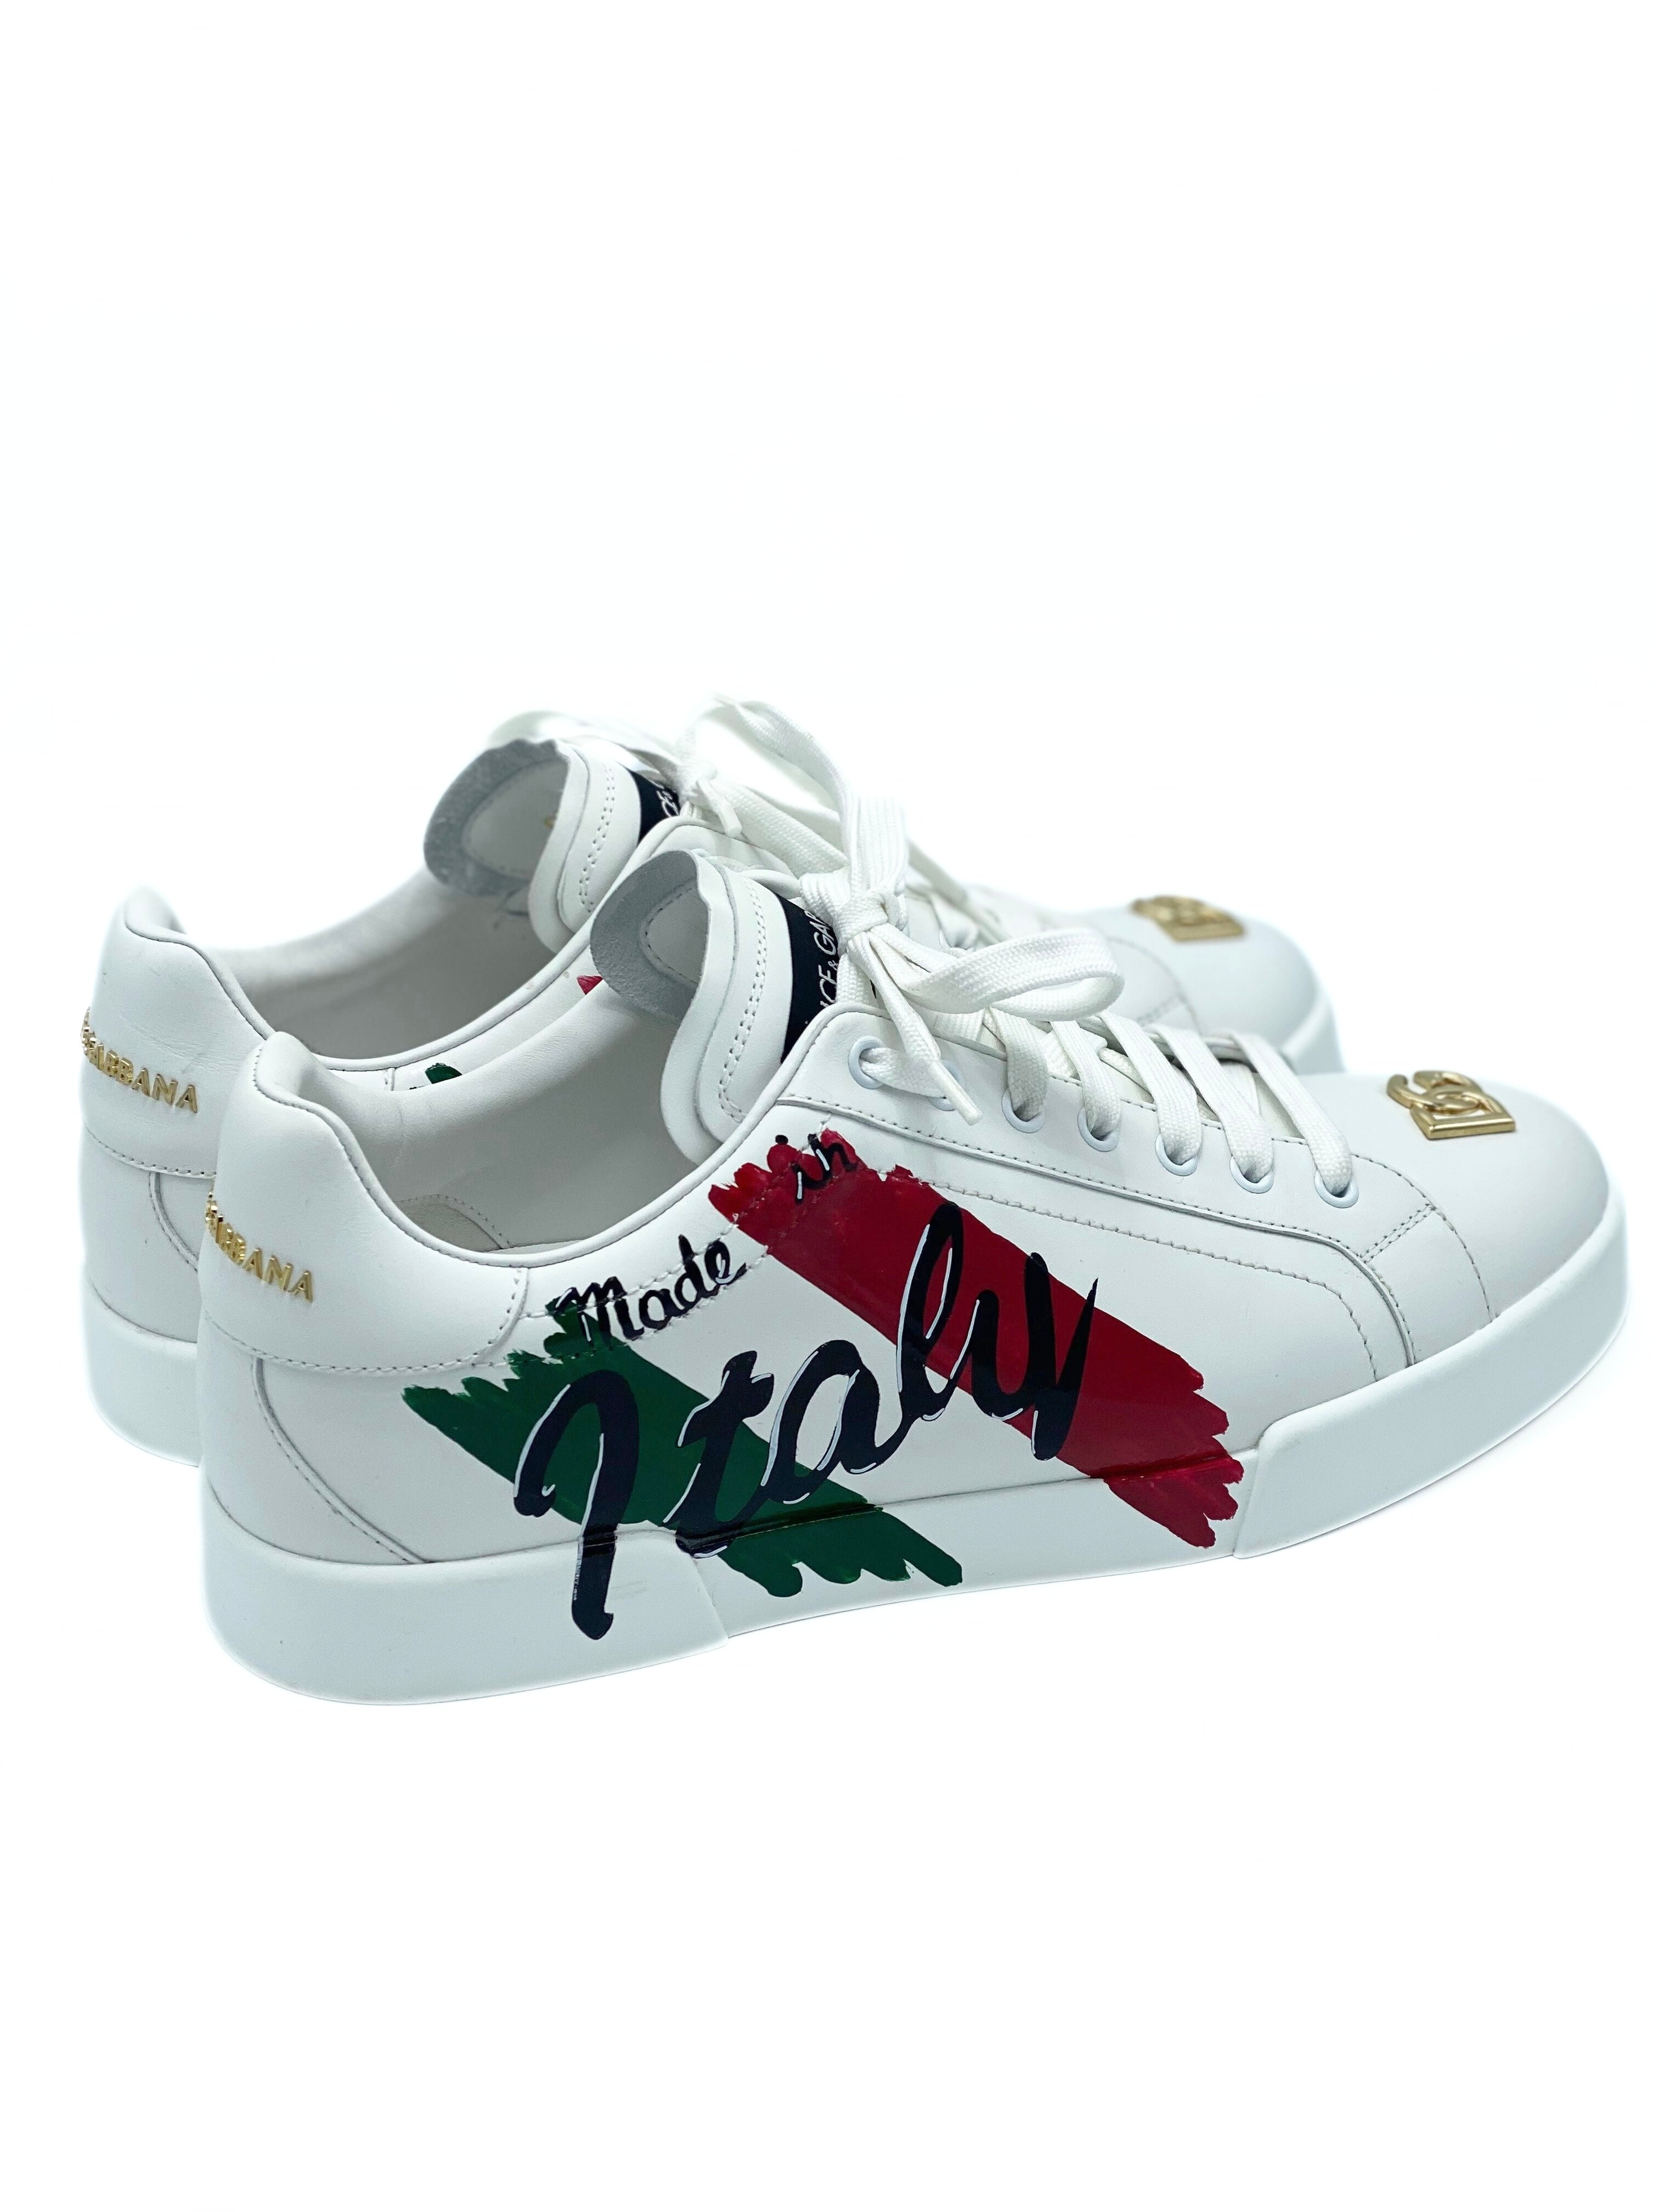 Champion Dolce & Gabbana Bassa Sneaker (9.5) “Made in Italy”